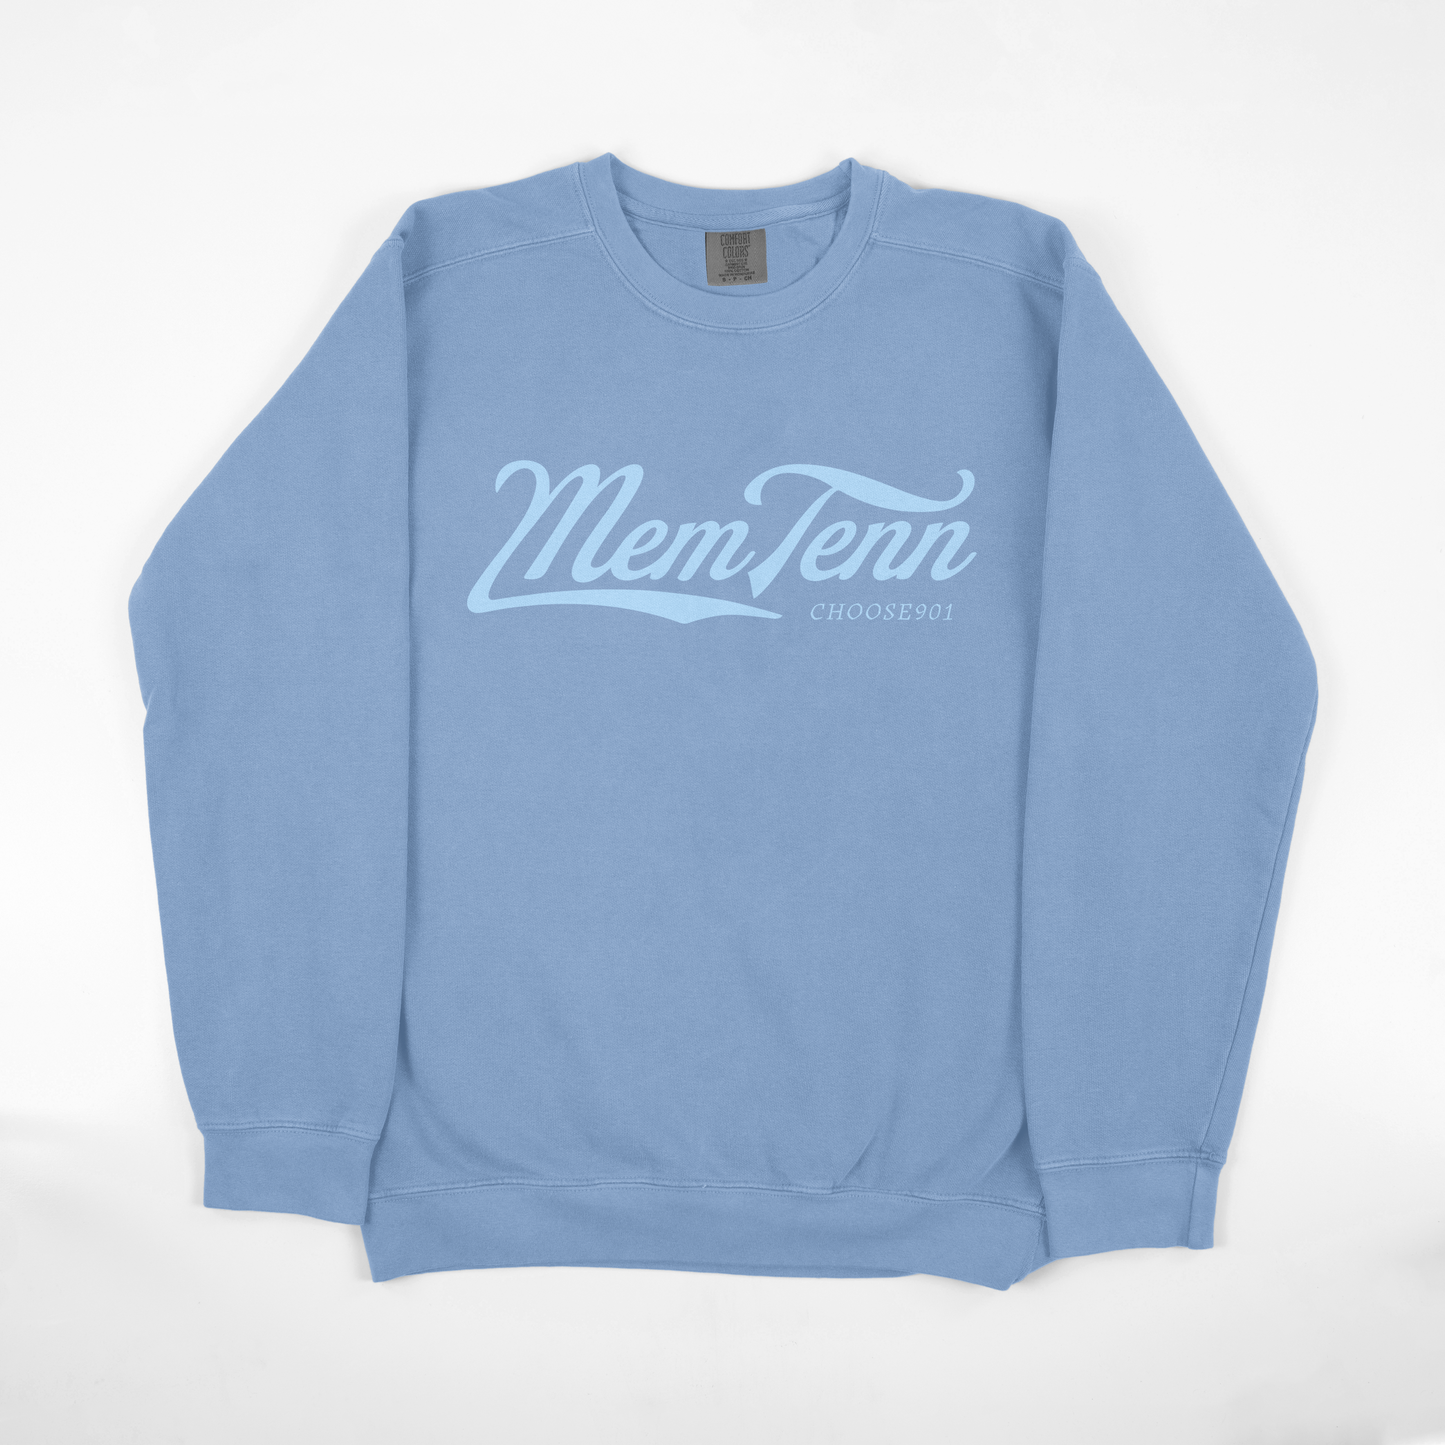 Memphis Tenn Cursive Sweatshirt on Flo Blu